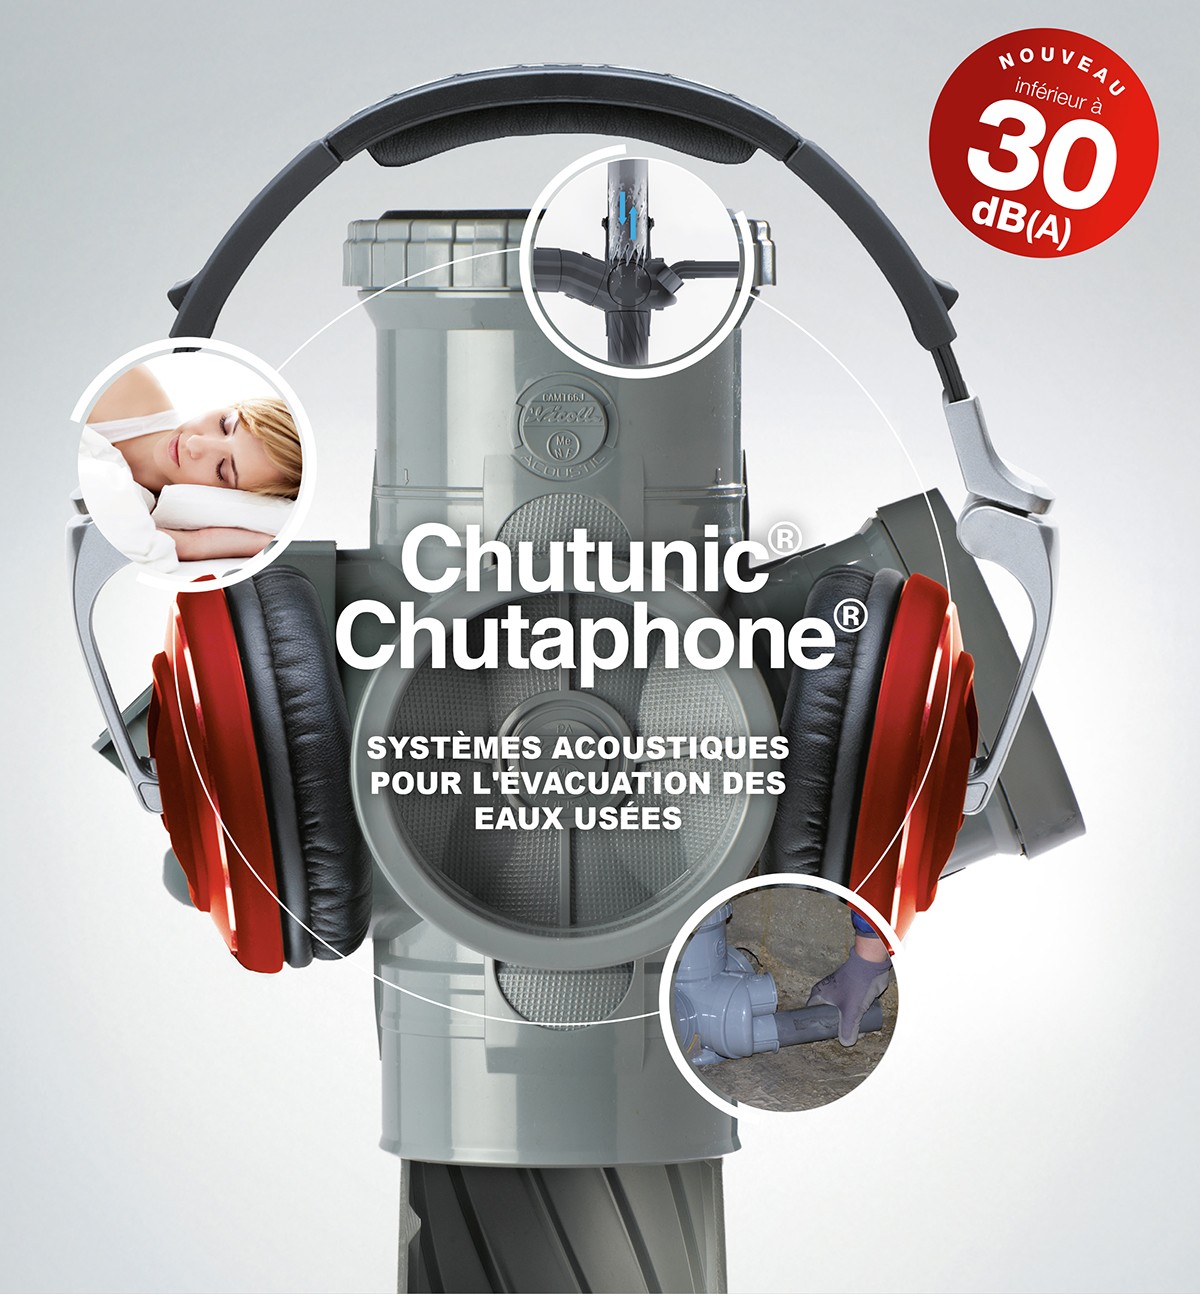 Chutaphone Chutunic